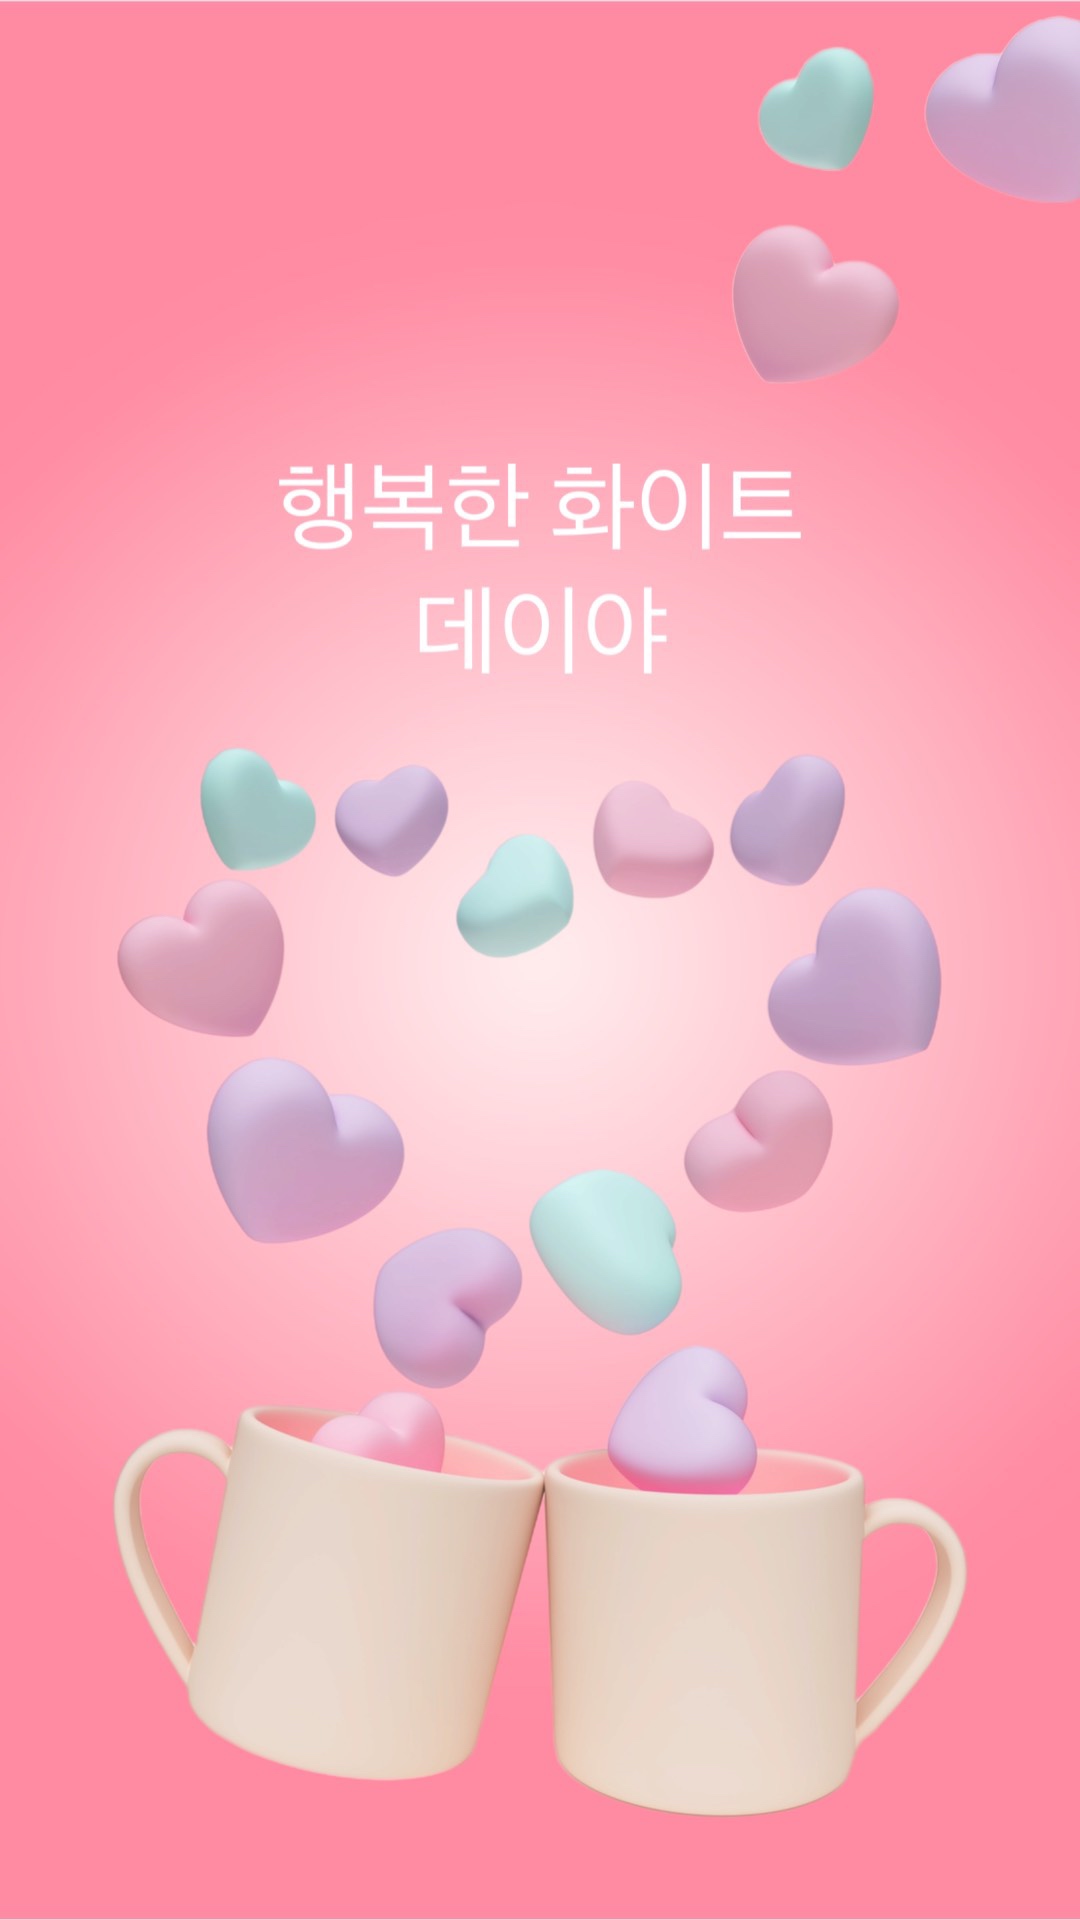 Korea white day romantic pastel hearts instagram story template